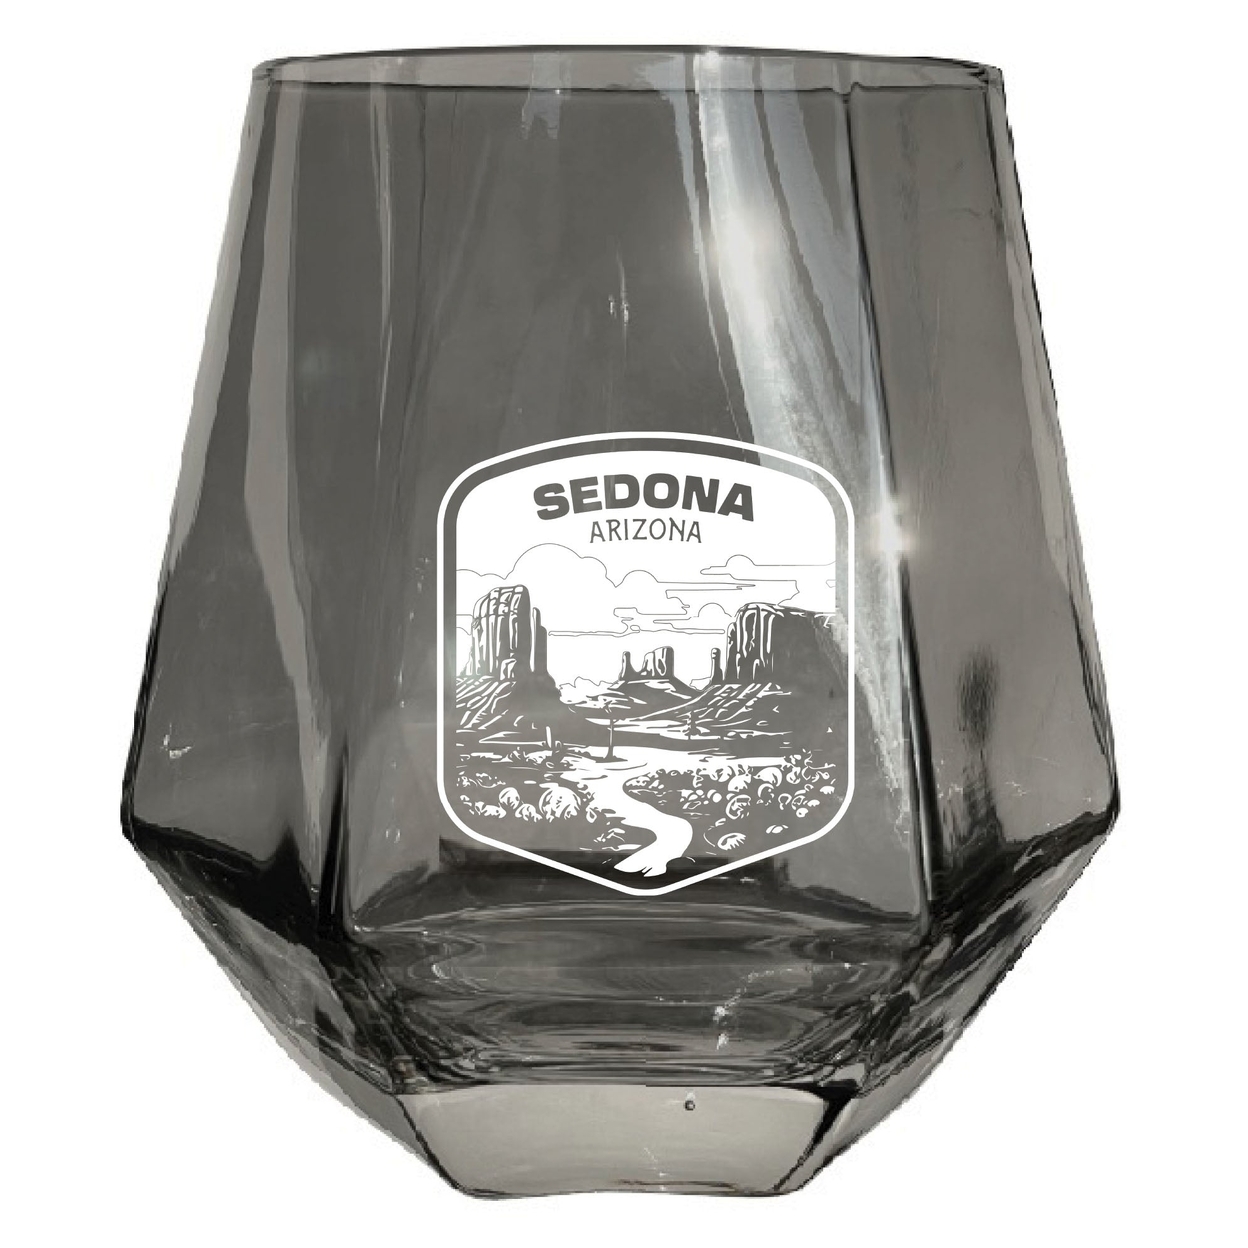 Sedona Arizona Souvenir Wine Glass EngravedDiamond 15 Oz Clear Iridescent - Iridescent,,Single Unit